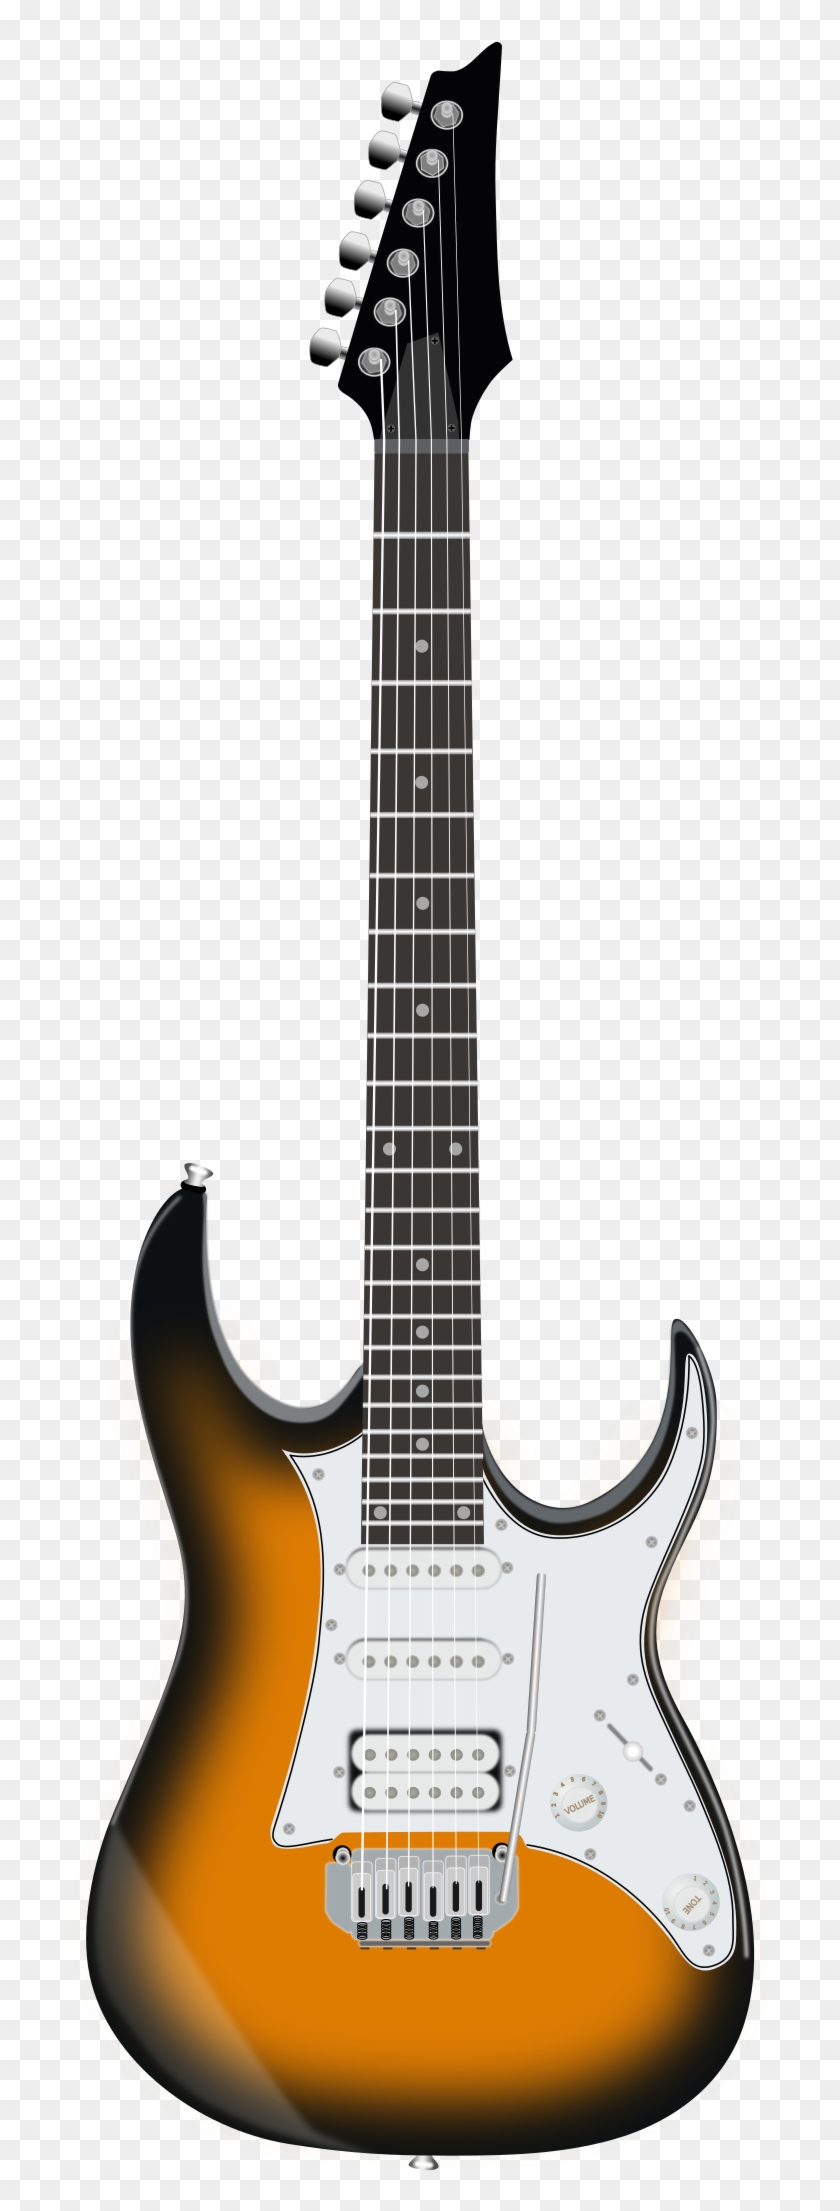 Free To Use Amp Public Domain Guitar Clip Art - Electric Guitar Ibanez Grg140-sb Sunburst #182999